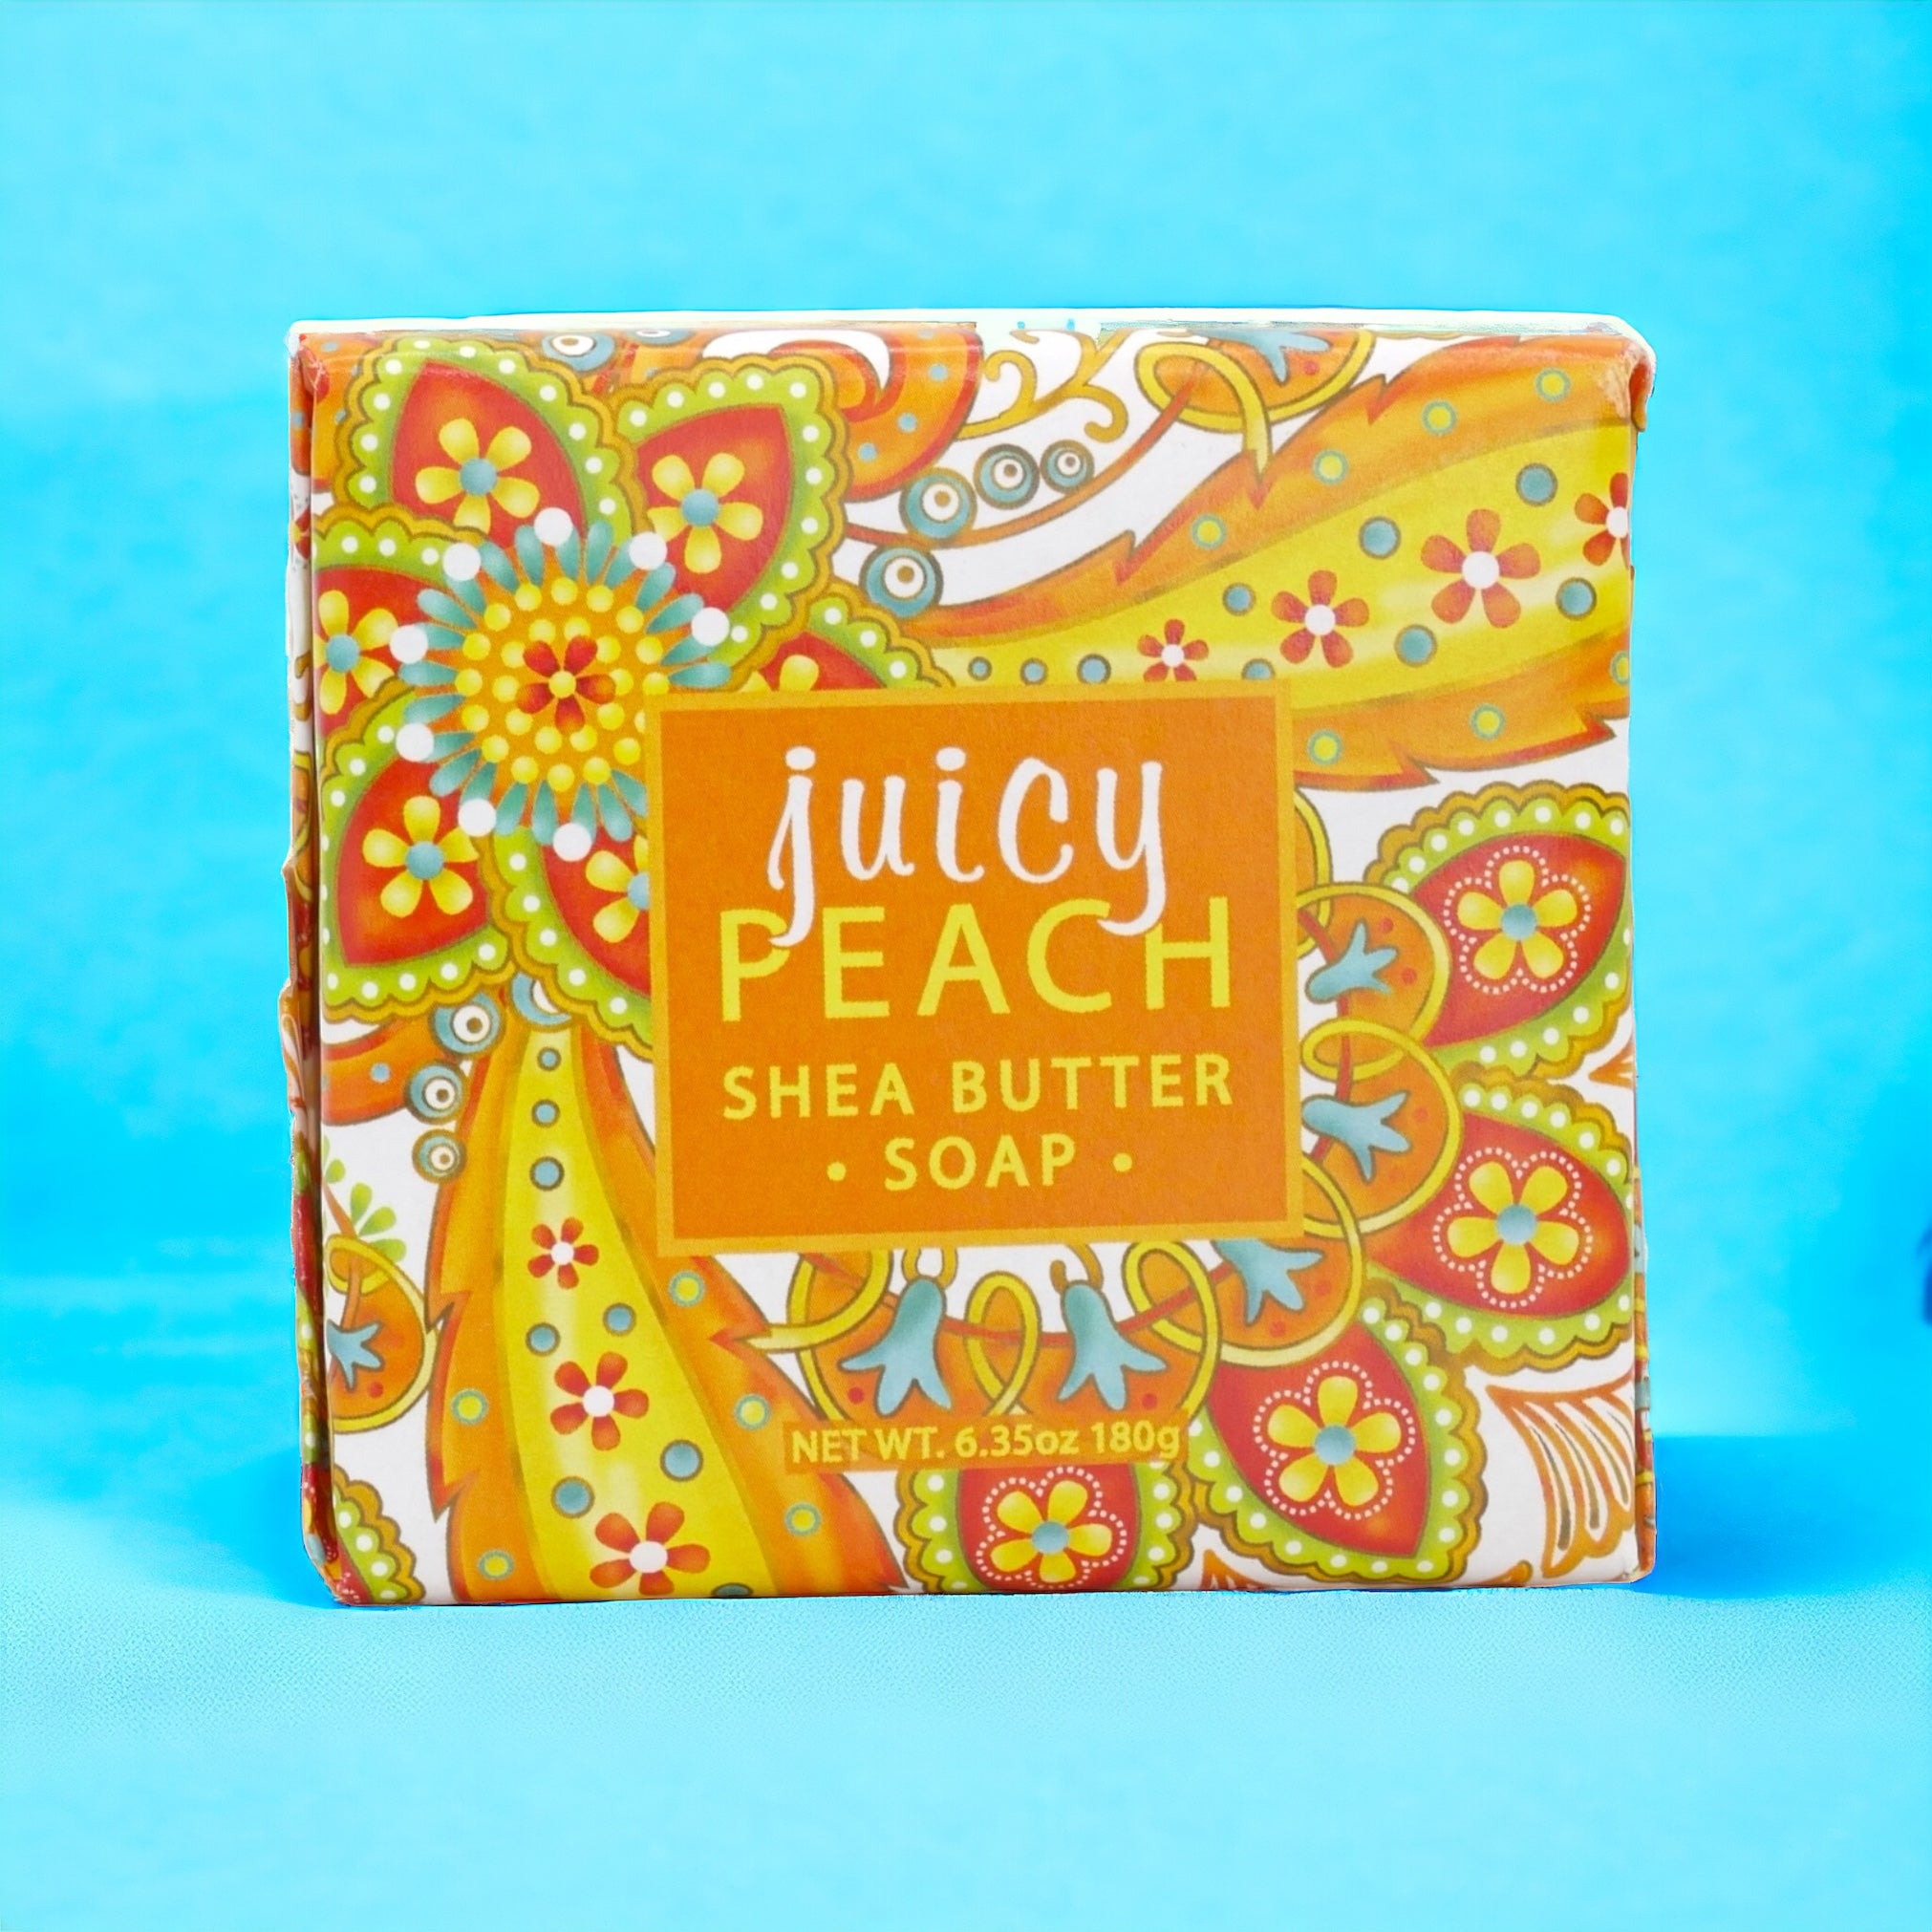 Juicy Peach Shea Butter Spa Soap by Greenwich Bay Trading Co.